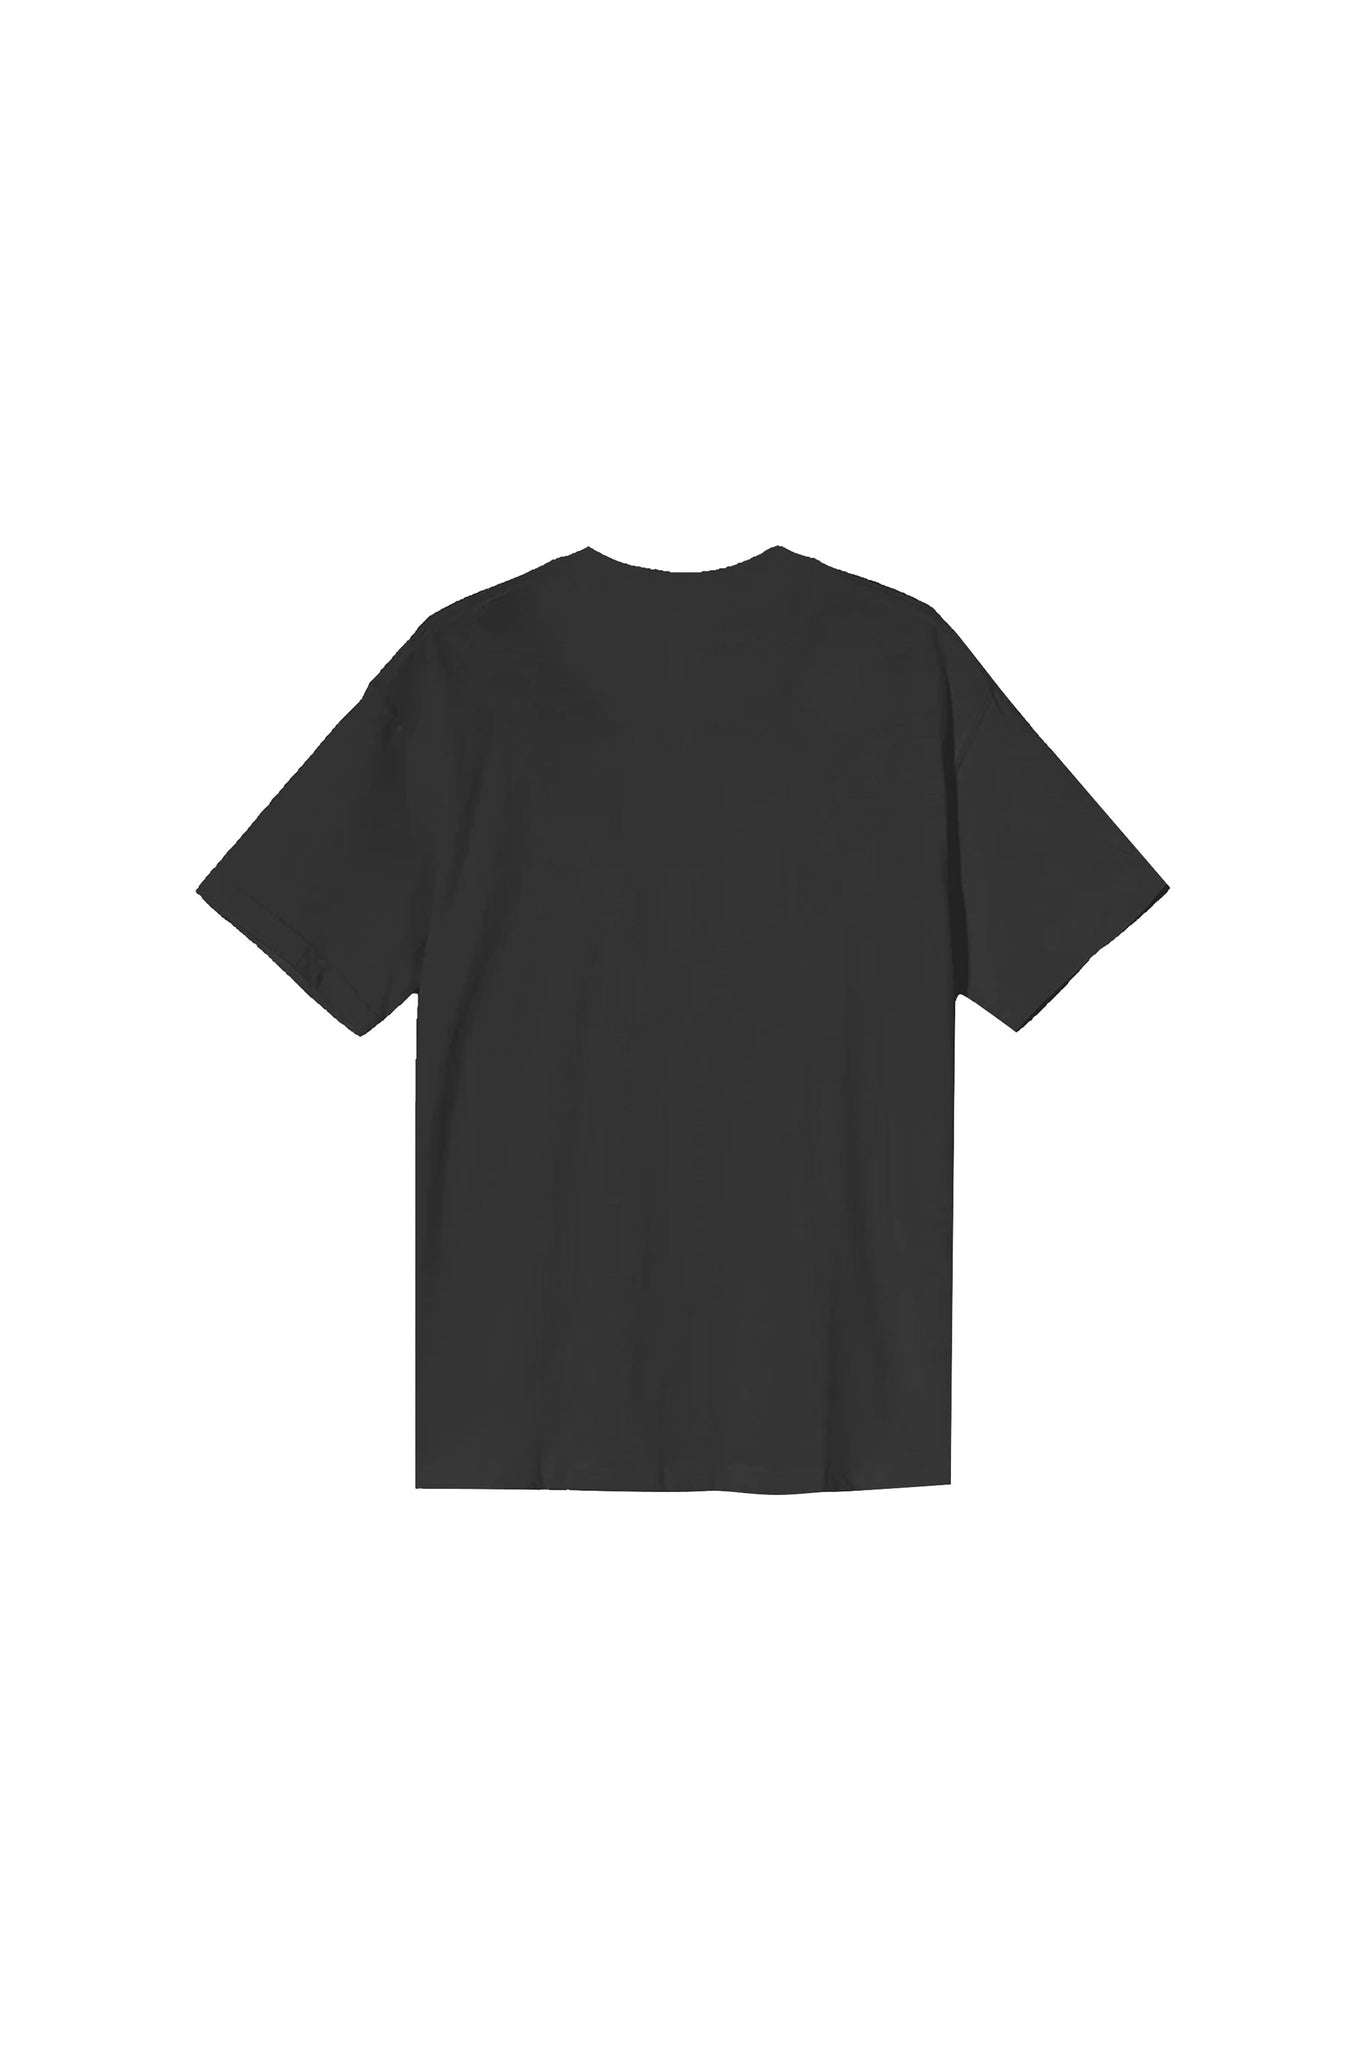 “NoFriends” Money Black T-Shirt